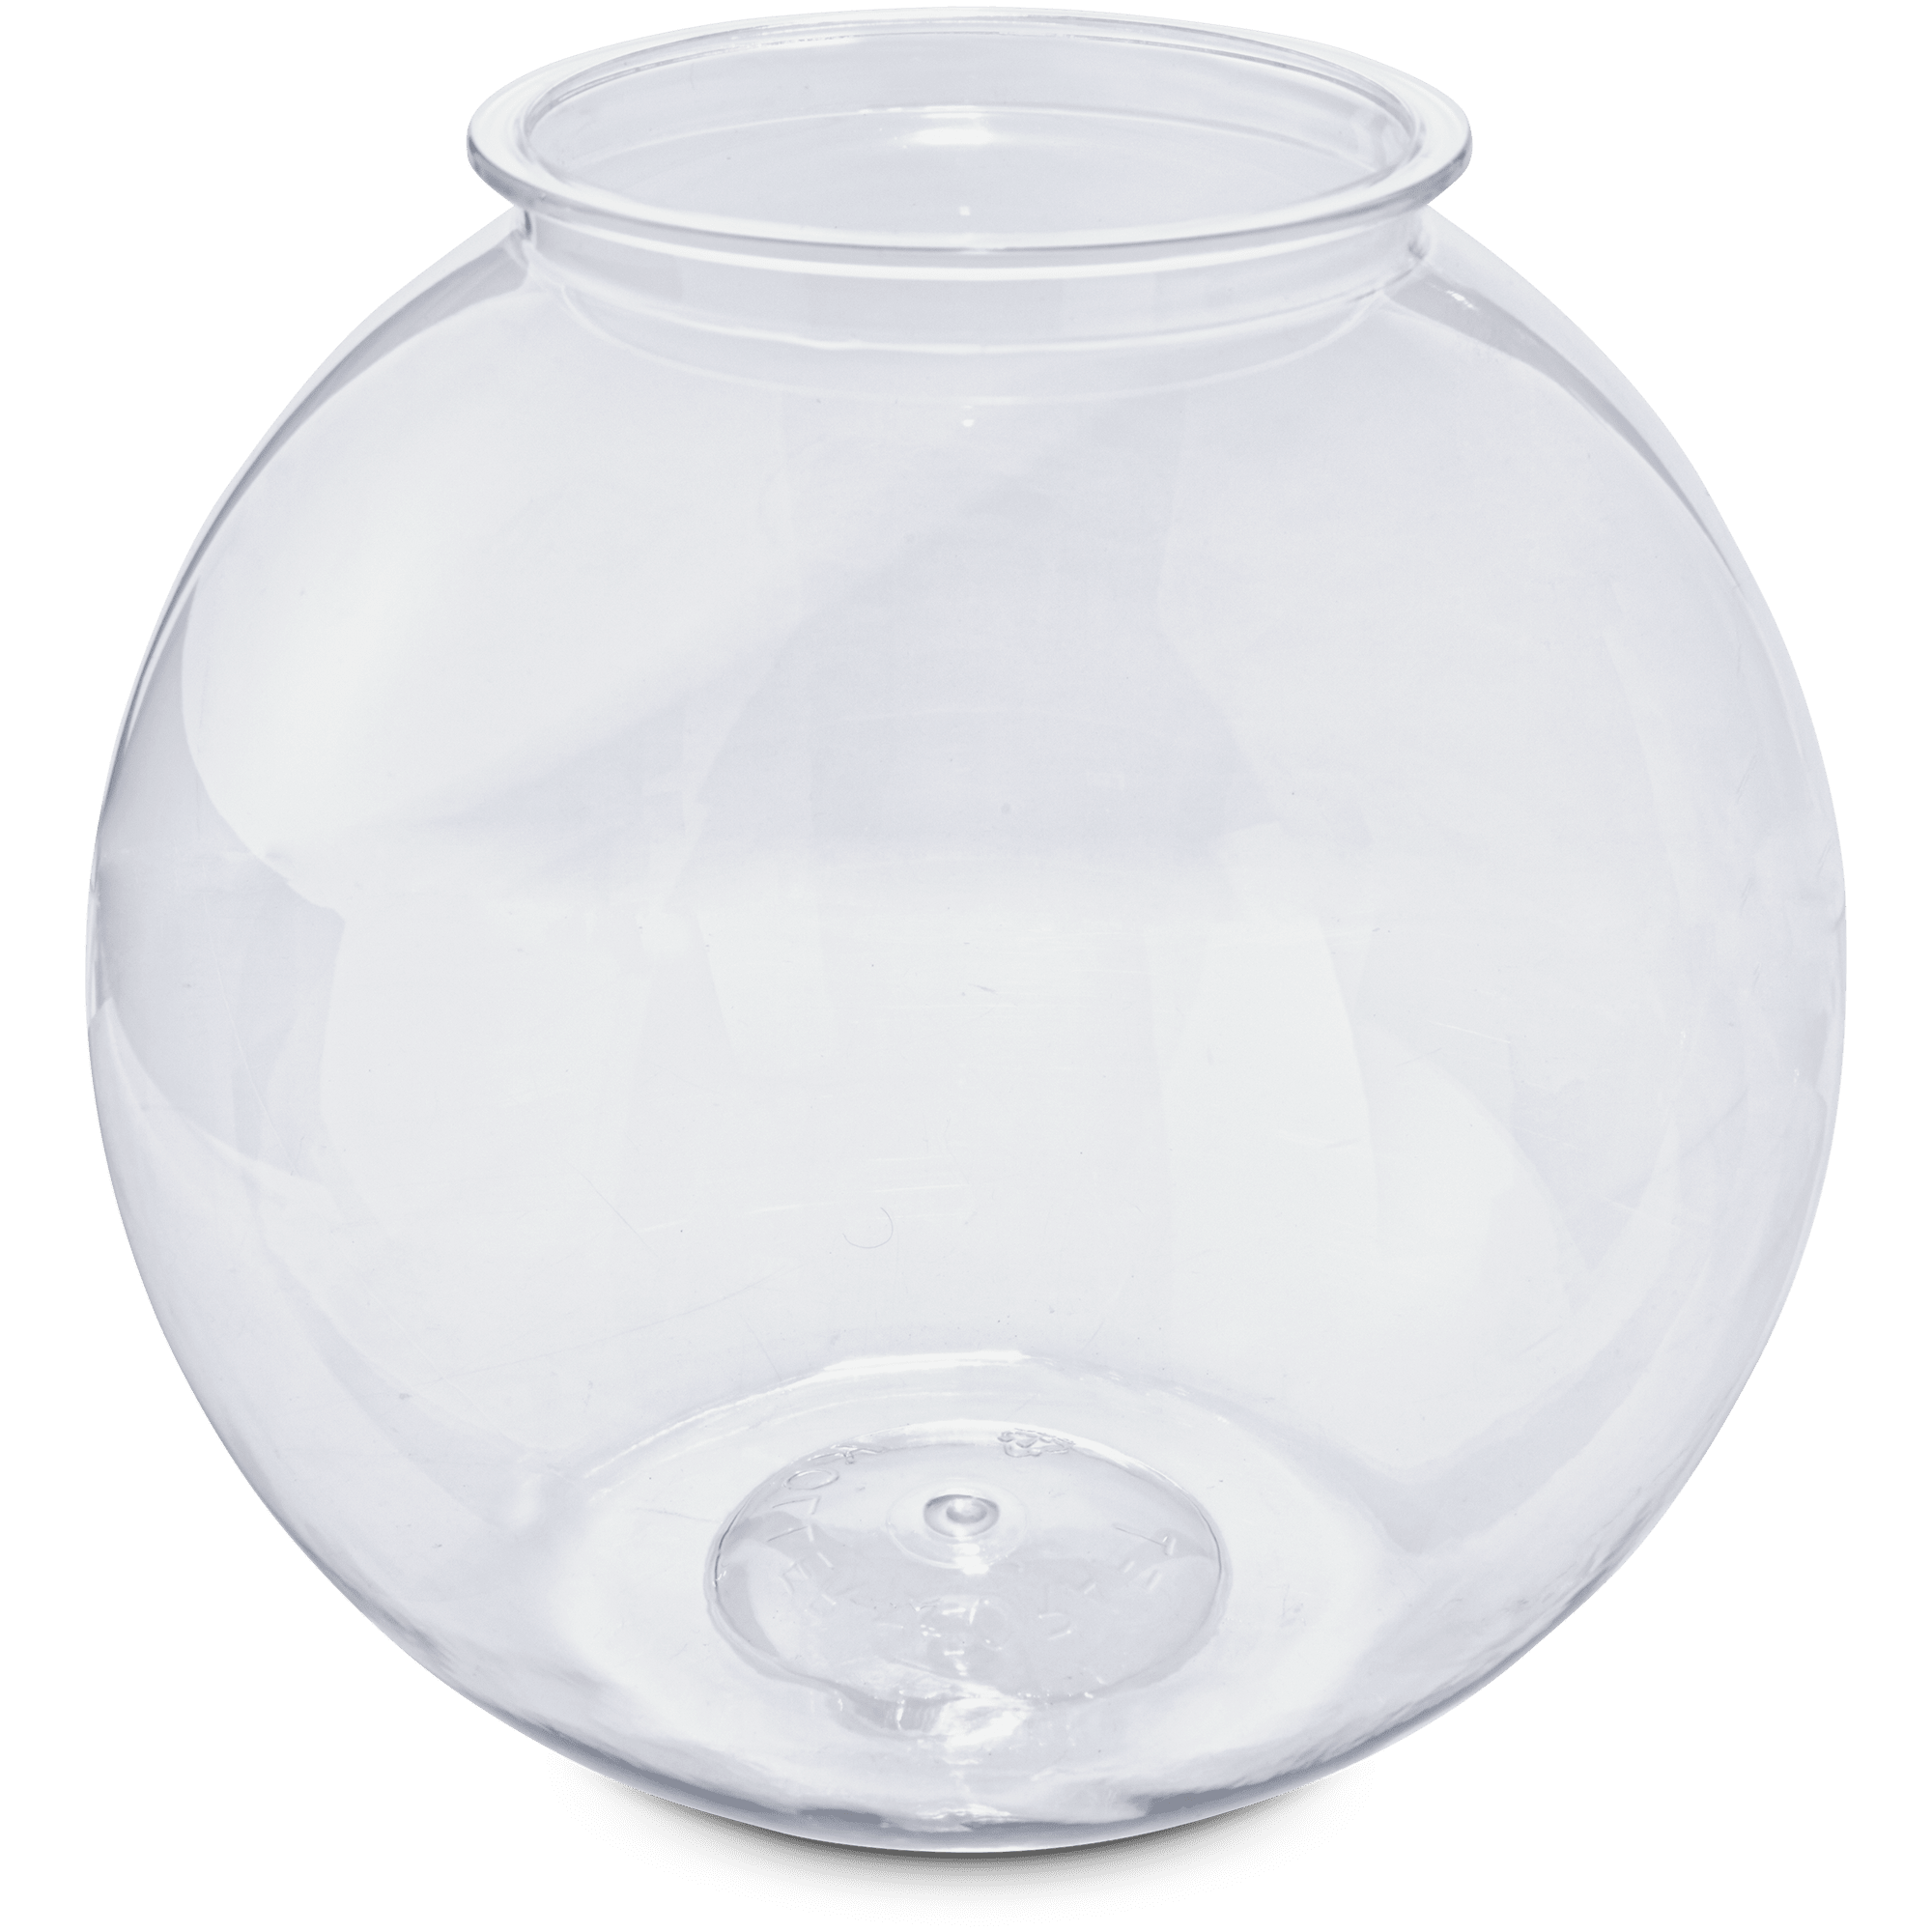 1.45 Gallon Round Plastic Fish Bowl